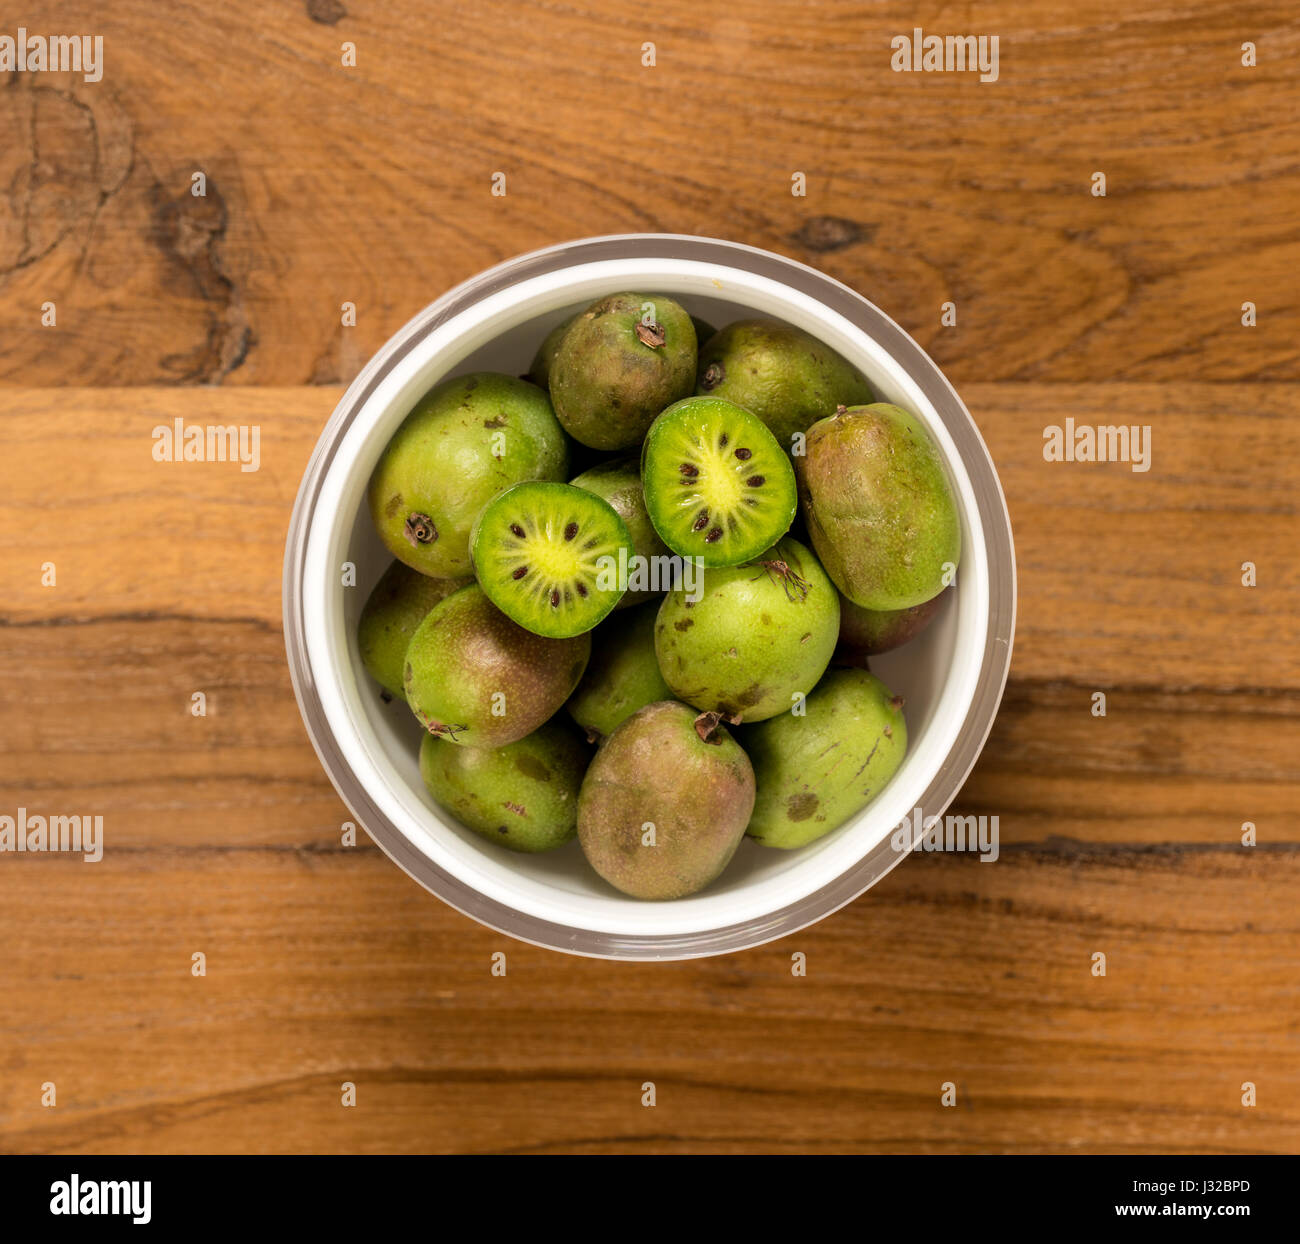 Kiwi fruit on a wooden table surface Stock Photo